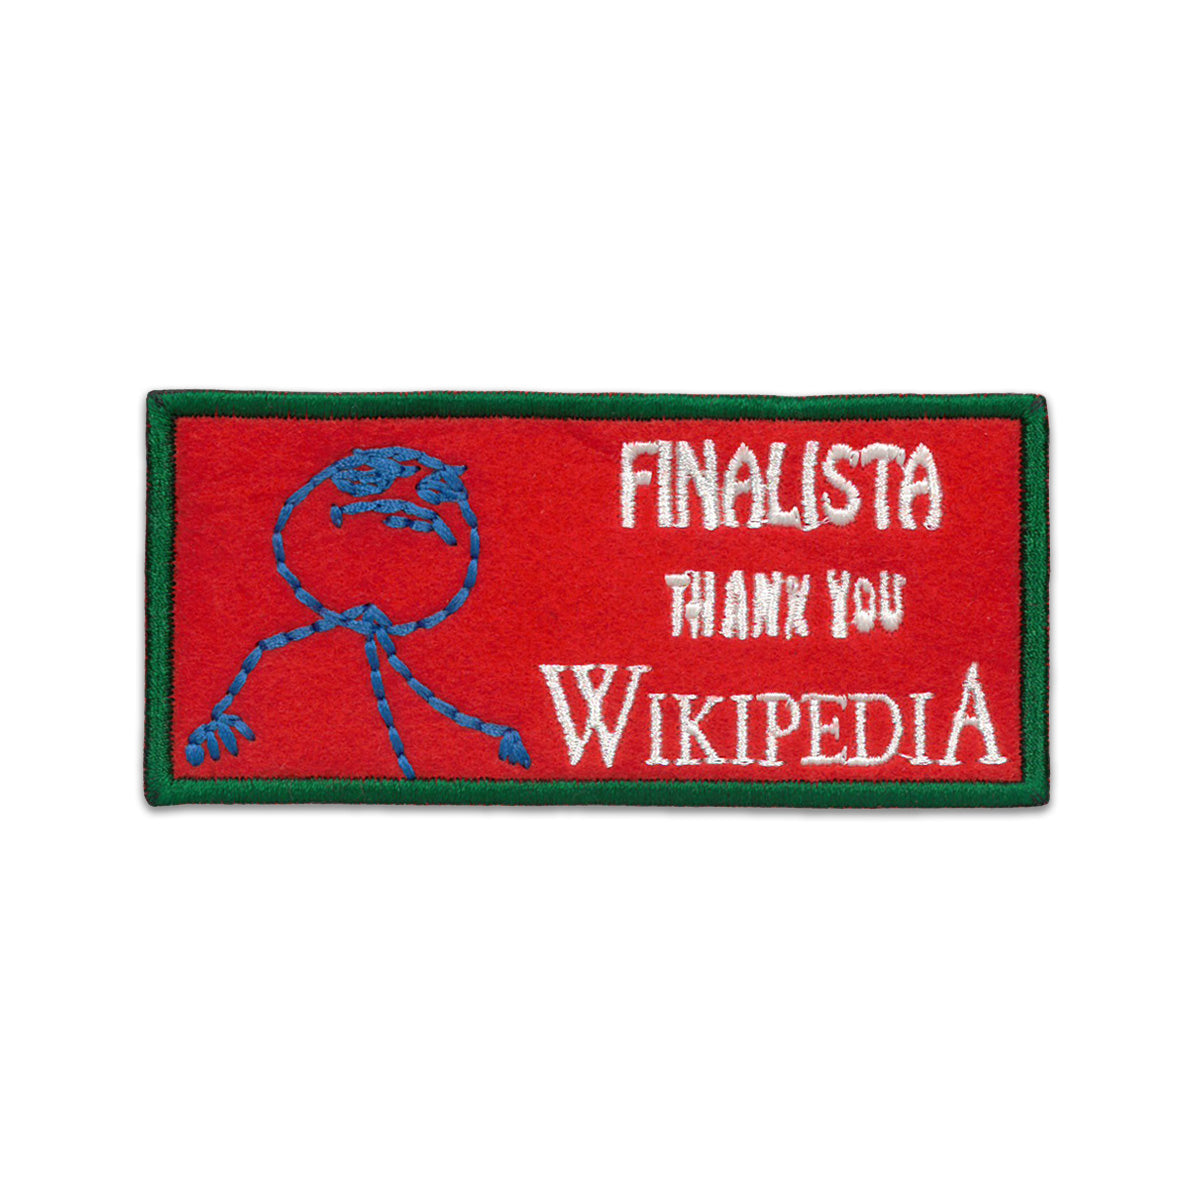 Finalista, thank you Wikipedia